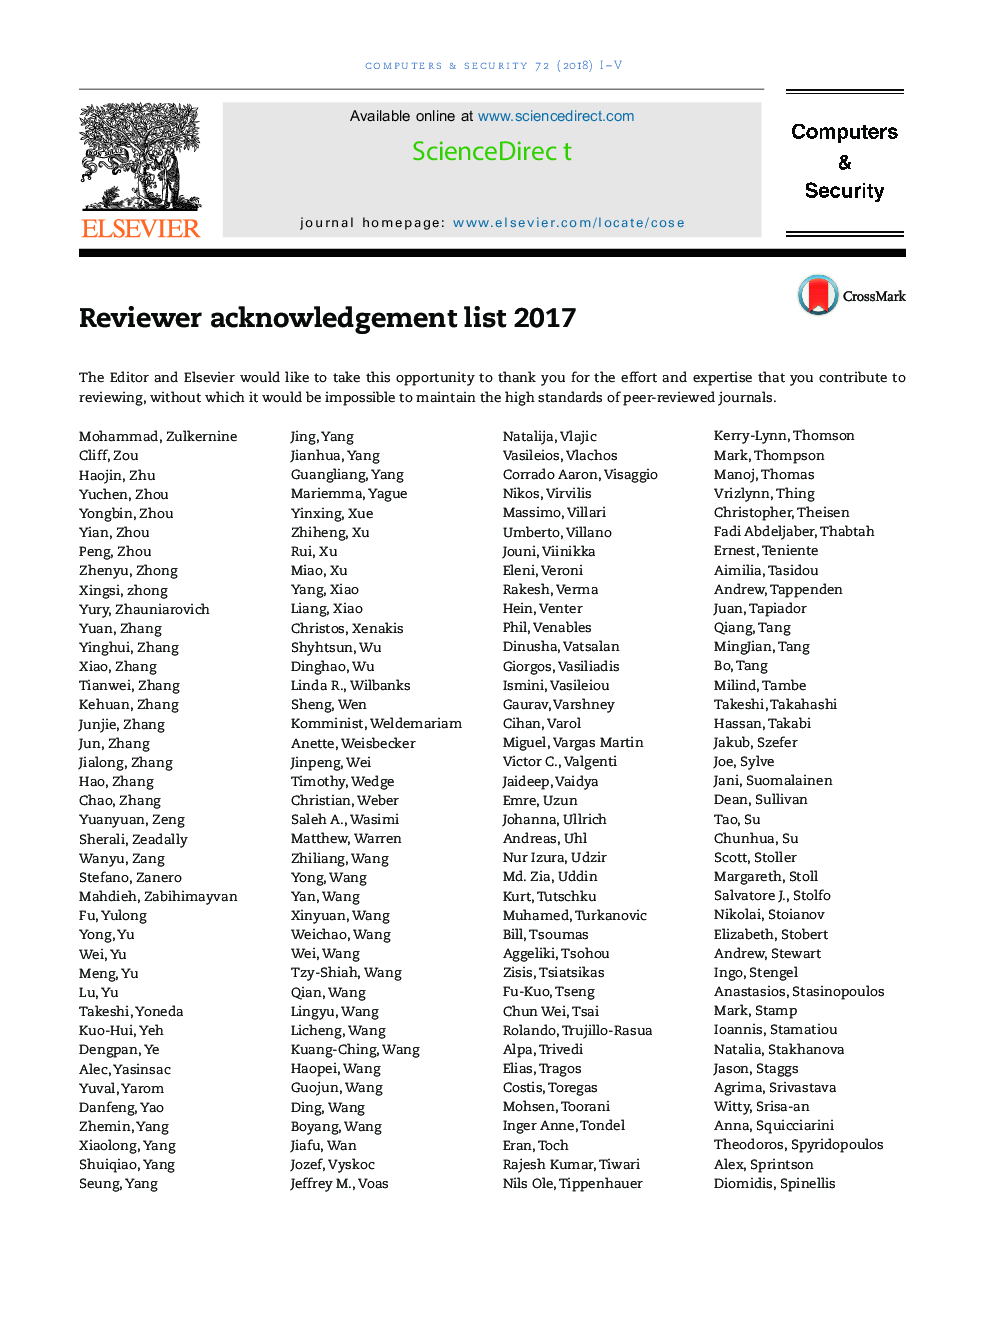 Reviewer Acknowledgement list_2017